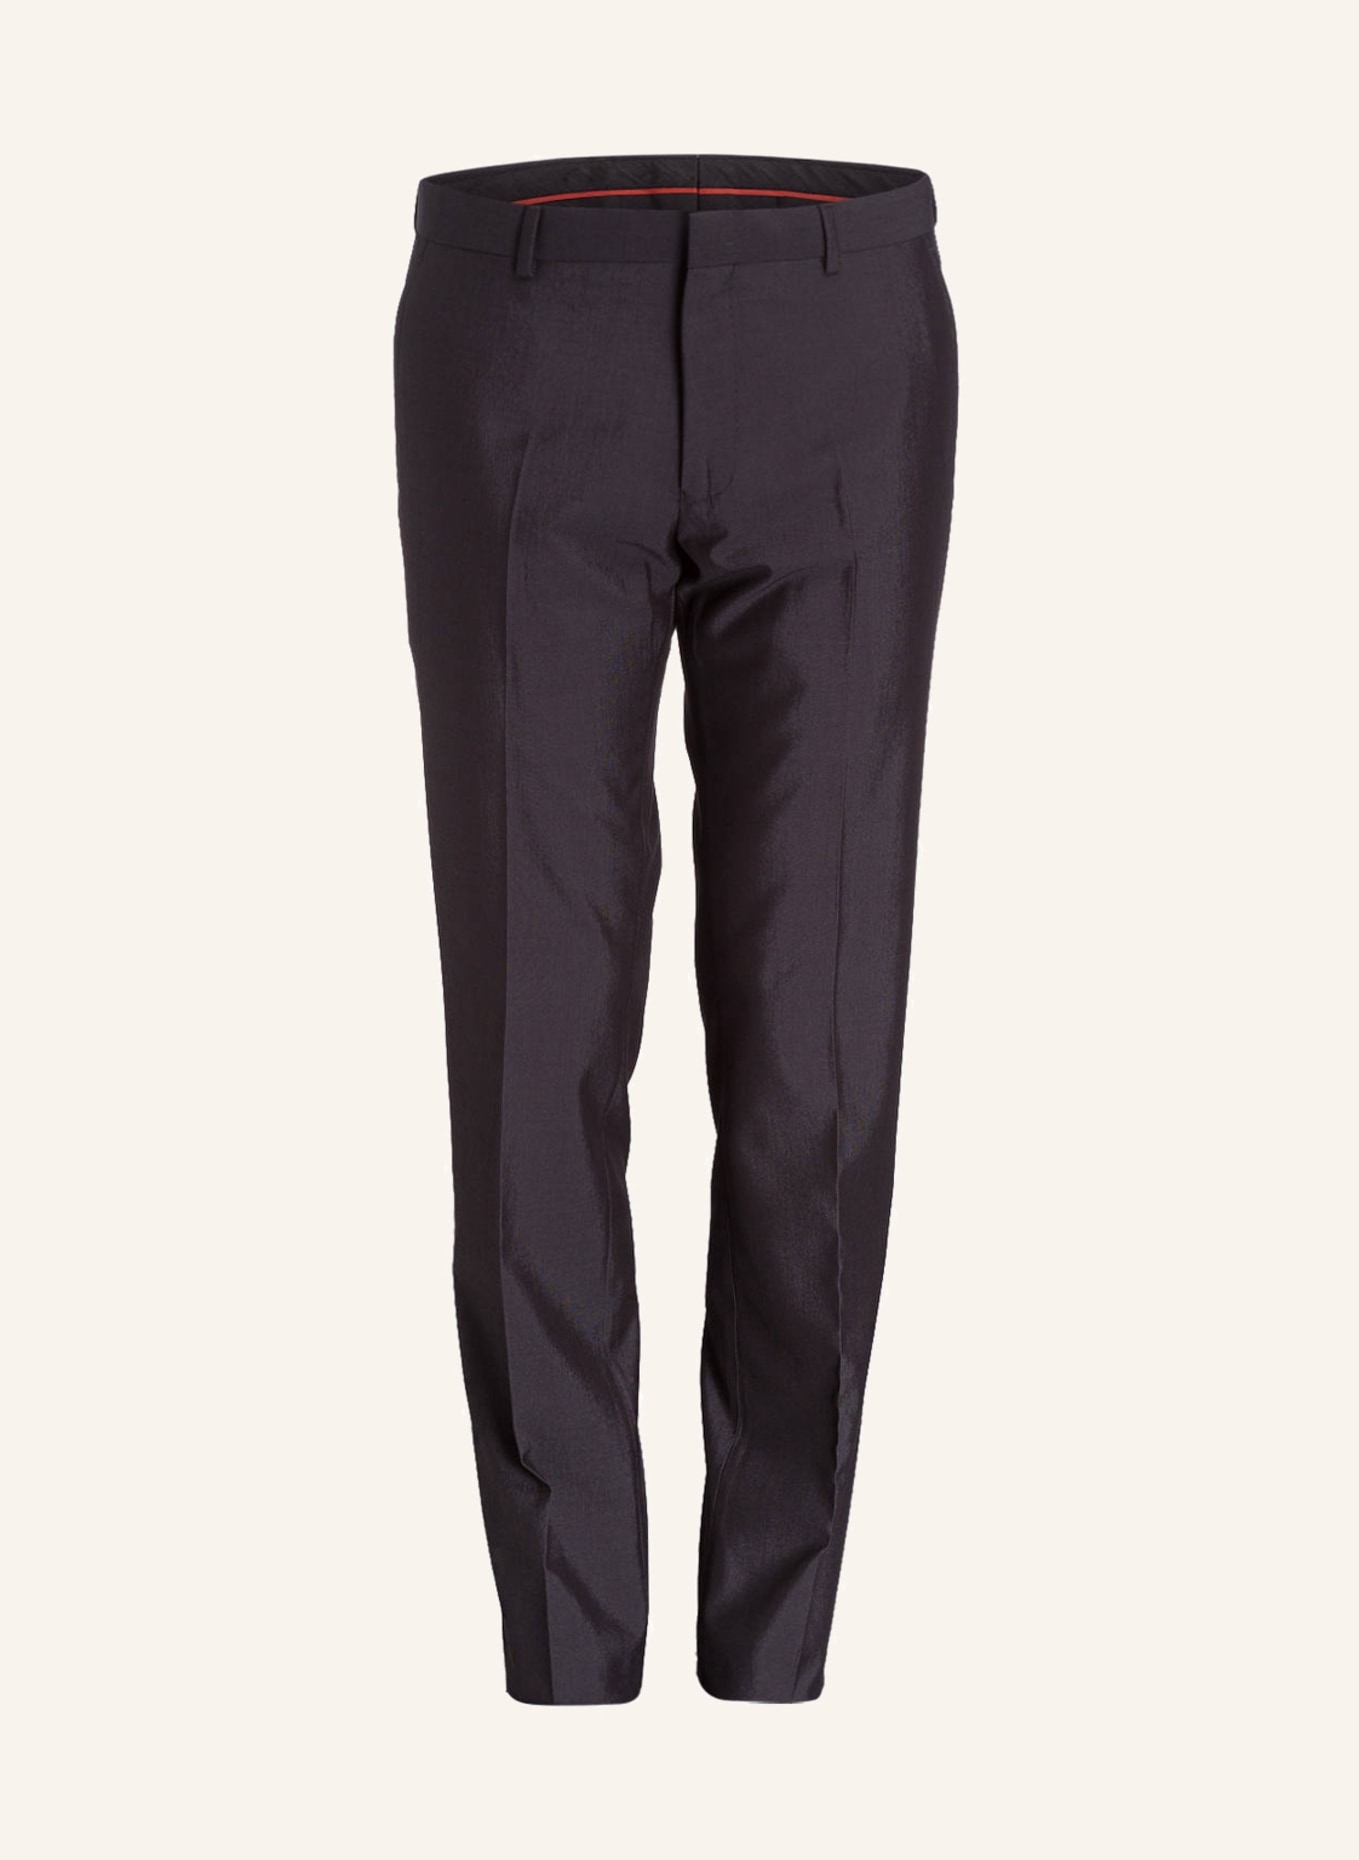 PAUL Anzughose Slim Fit, Farbe: 5 SCHWARZ (Bild 1)